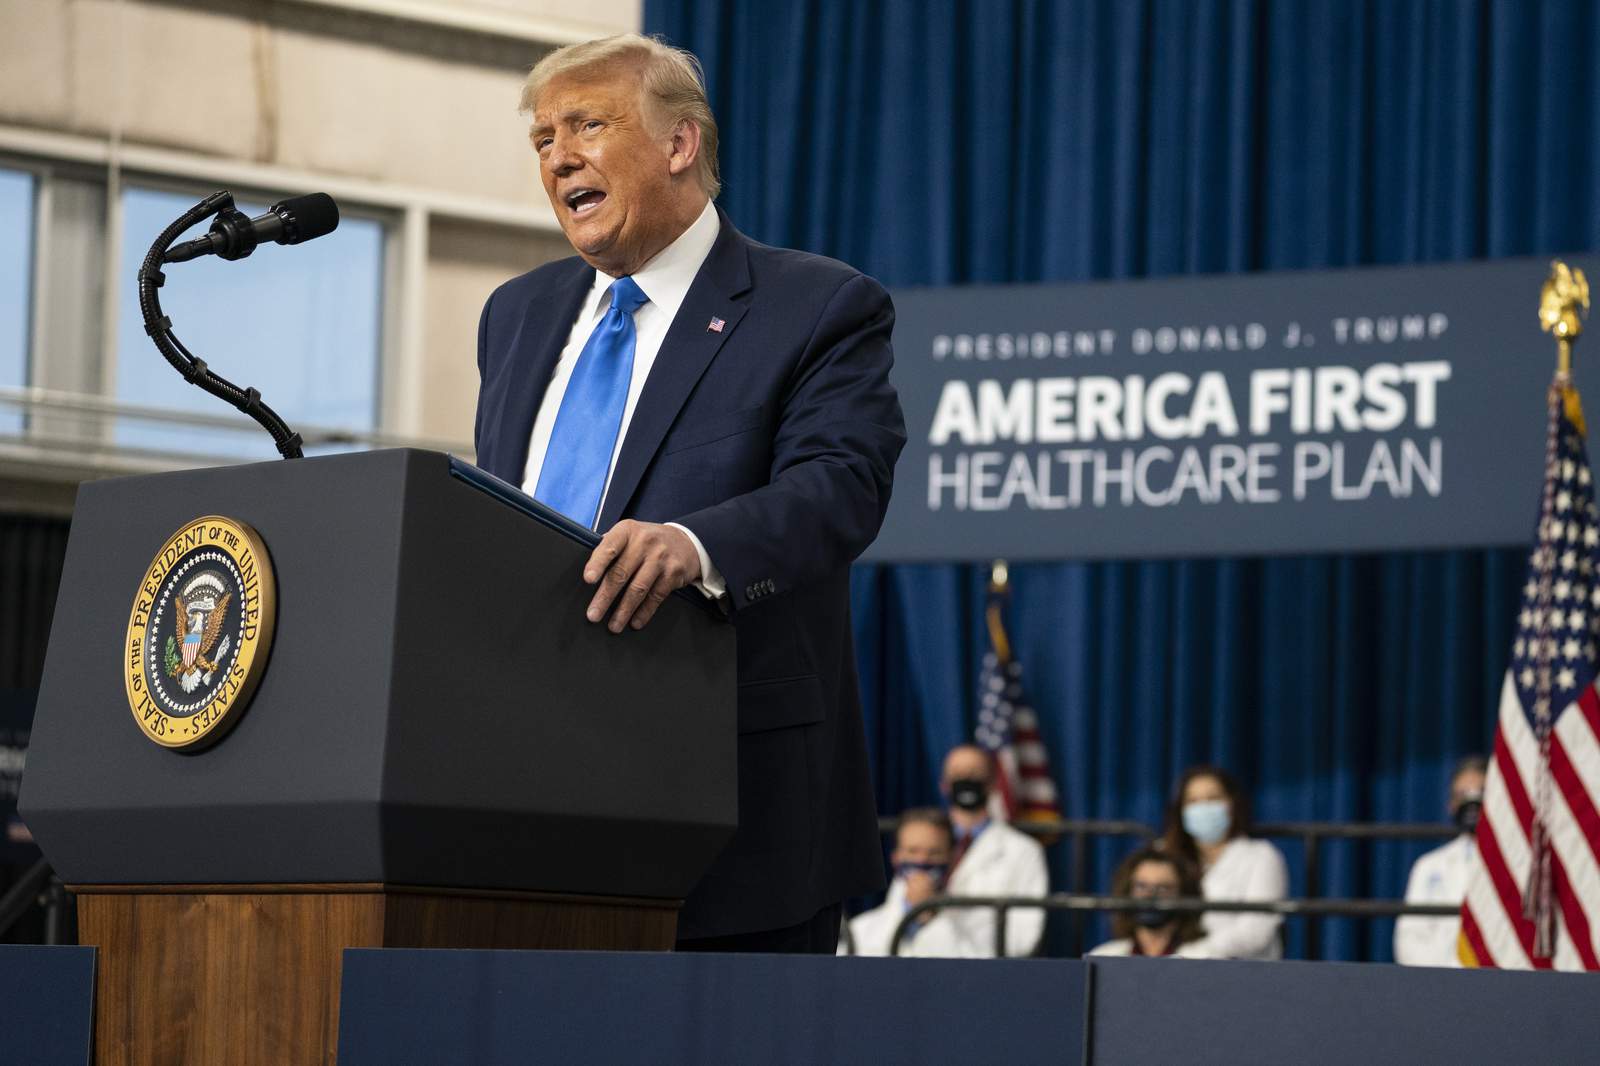 Trump promotes health care 'vision' but gaps remain